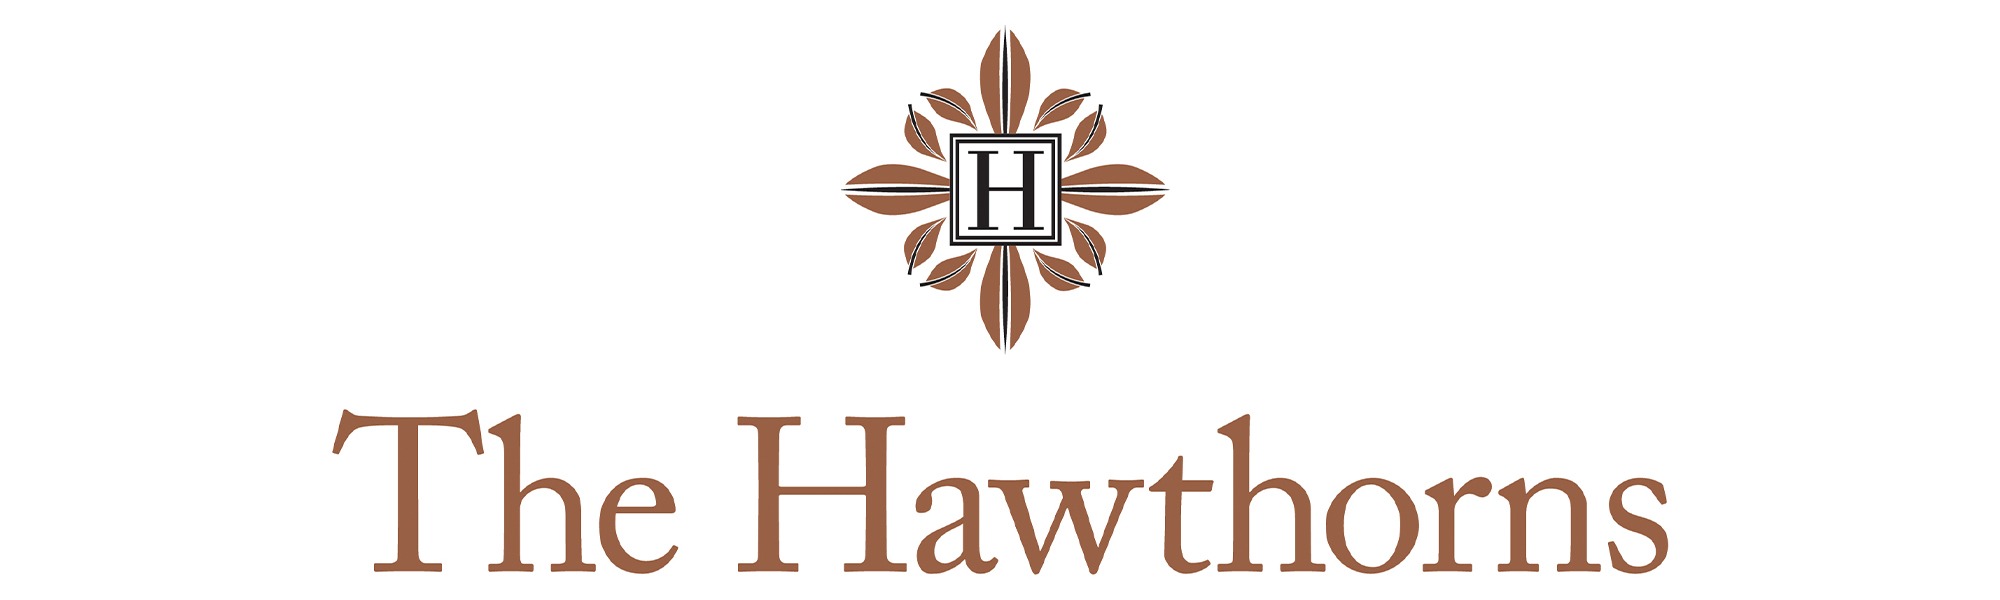 The Hawthorns Banner